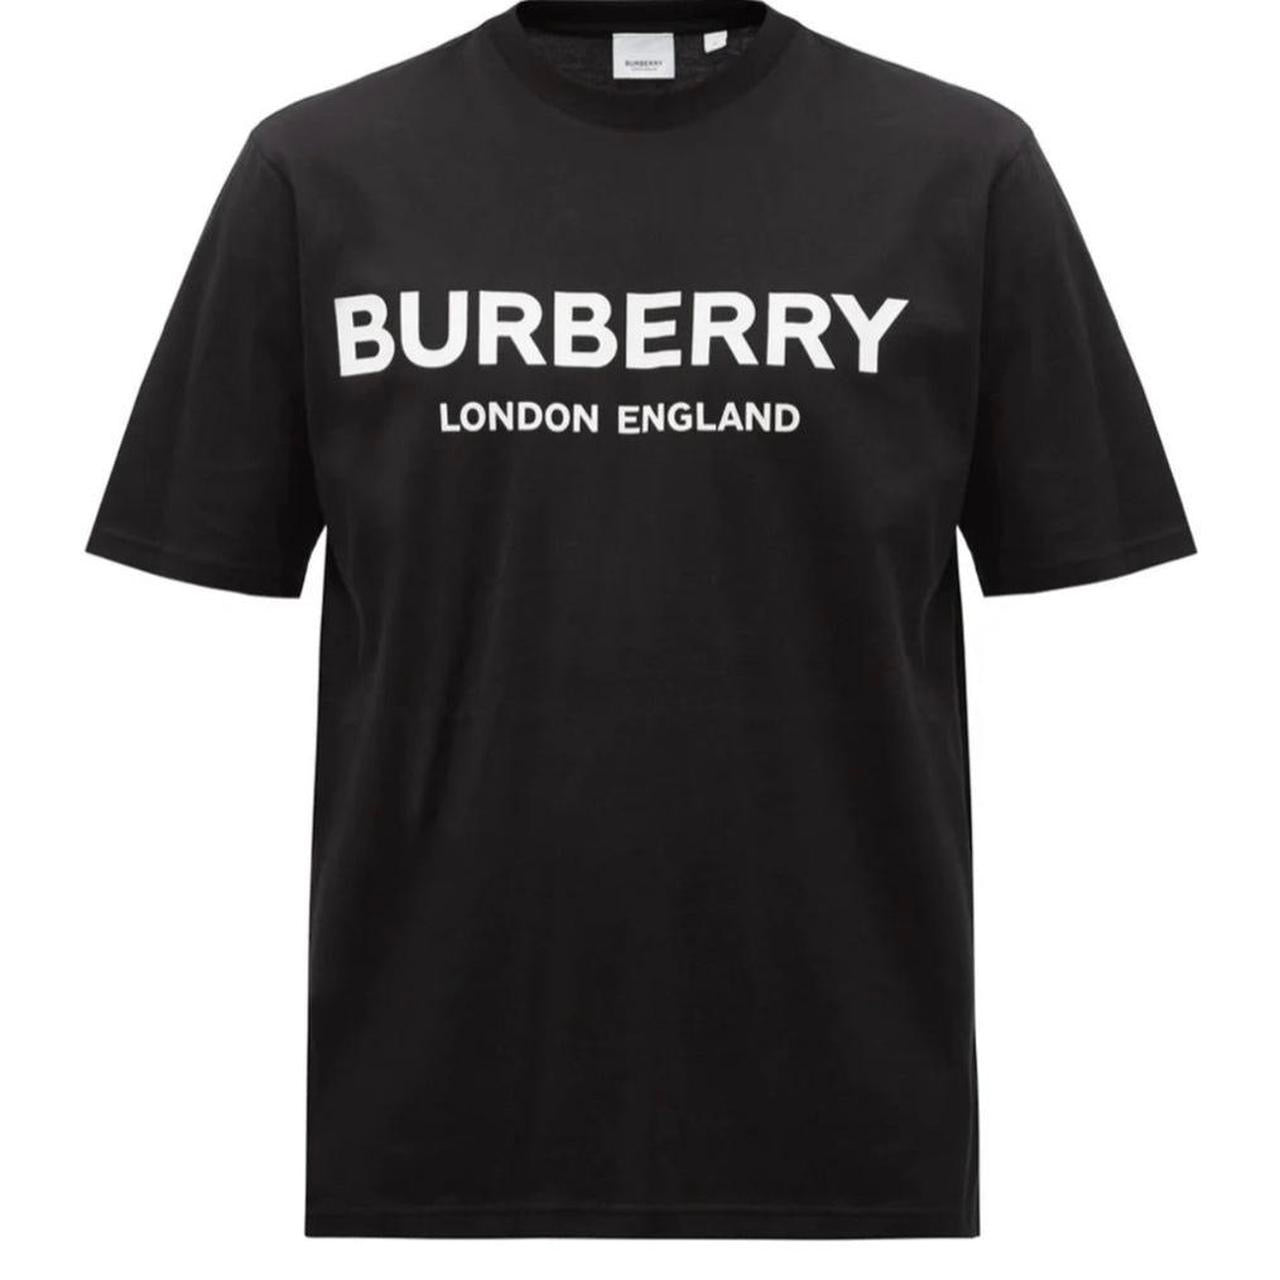 BURBERRY LONDON ENGLAND TSHIRT & SHORTS FULL SET - BLACK / BEIGE